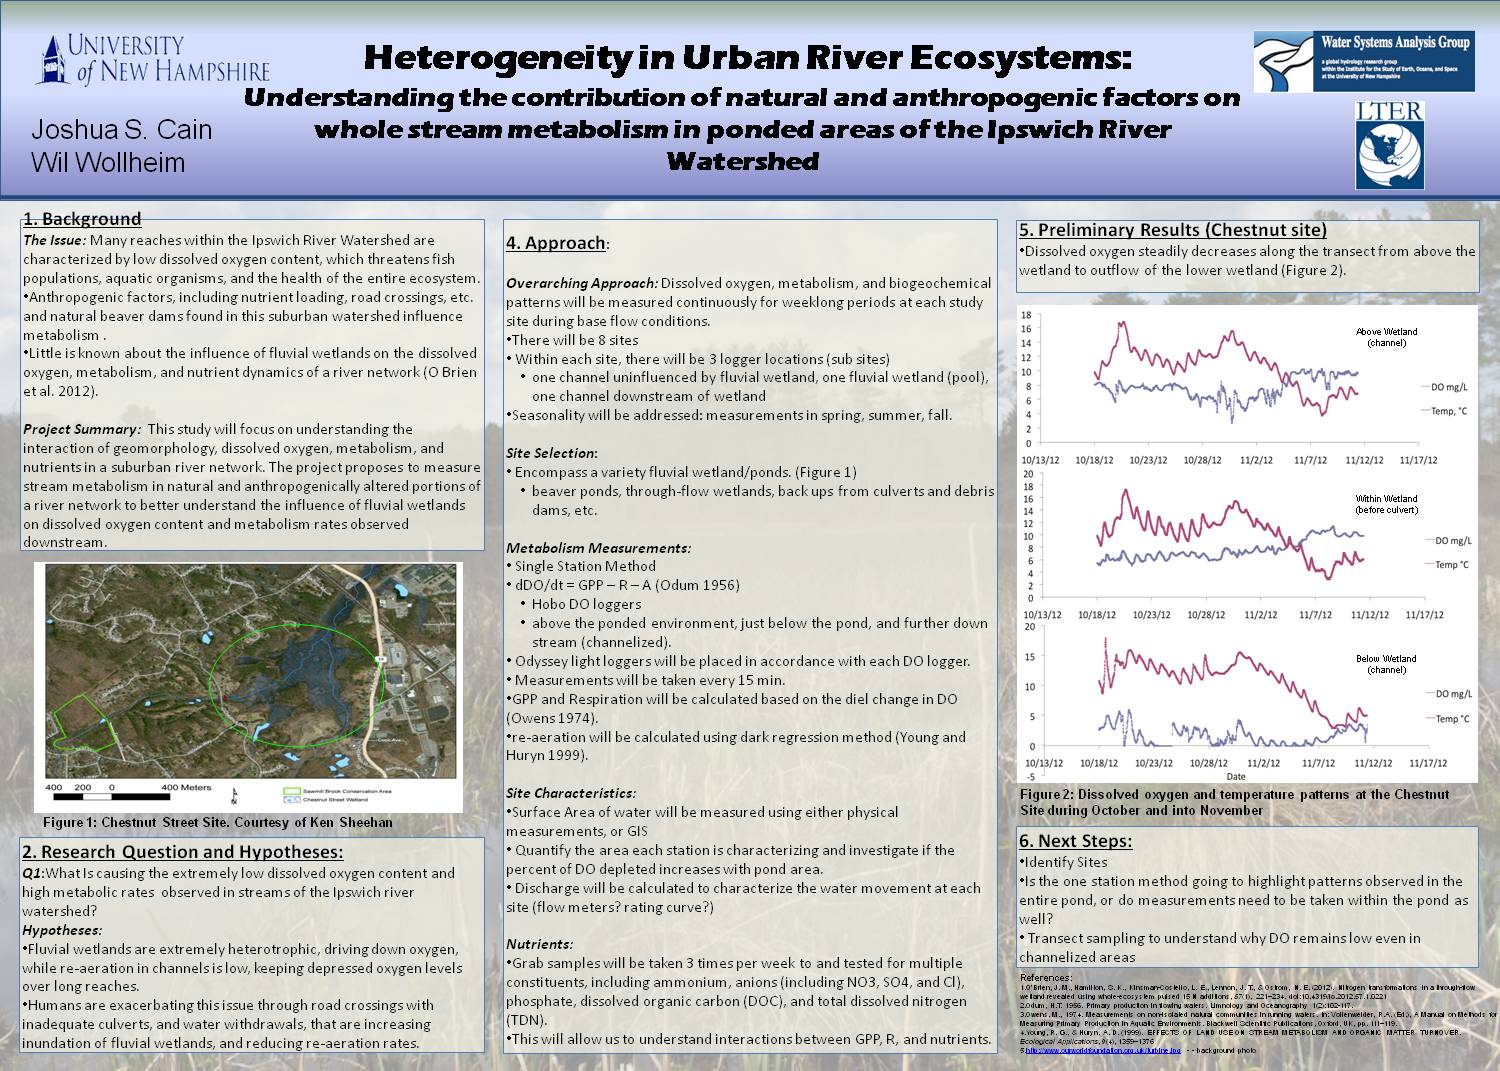 Heterogeneity In Urban River Ecosystems by jsccain